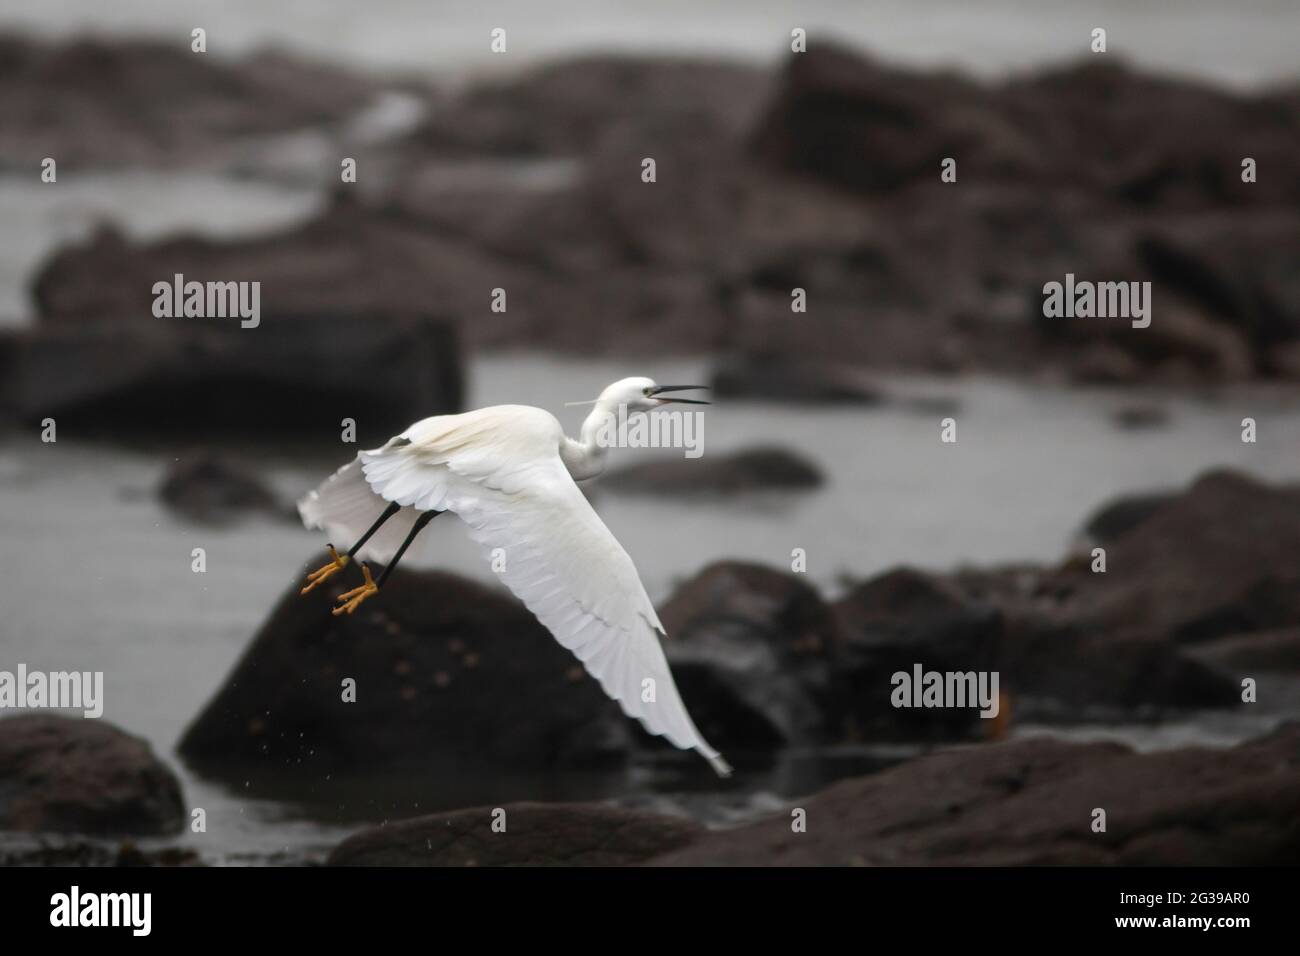 Little egret by a beach in Marazion, Cornwall Stock Photo